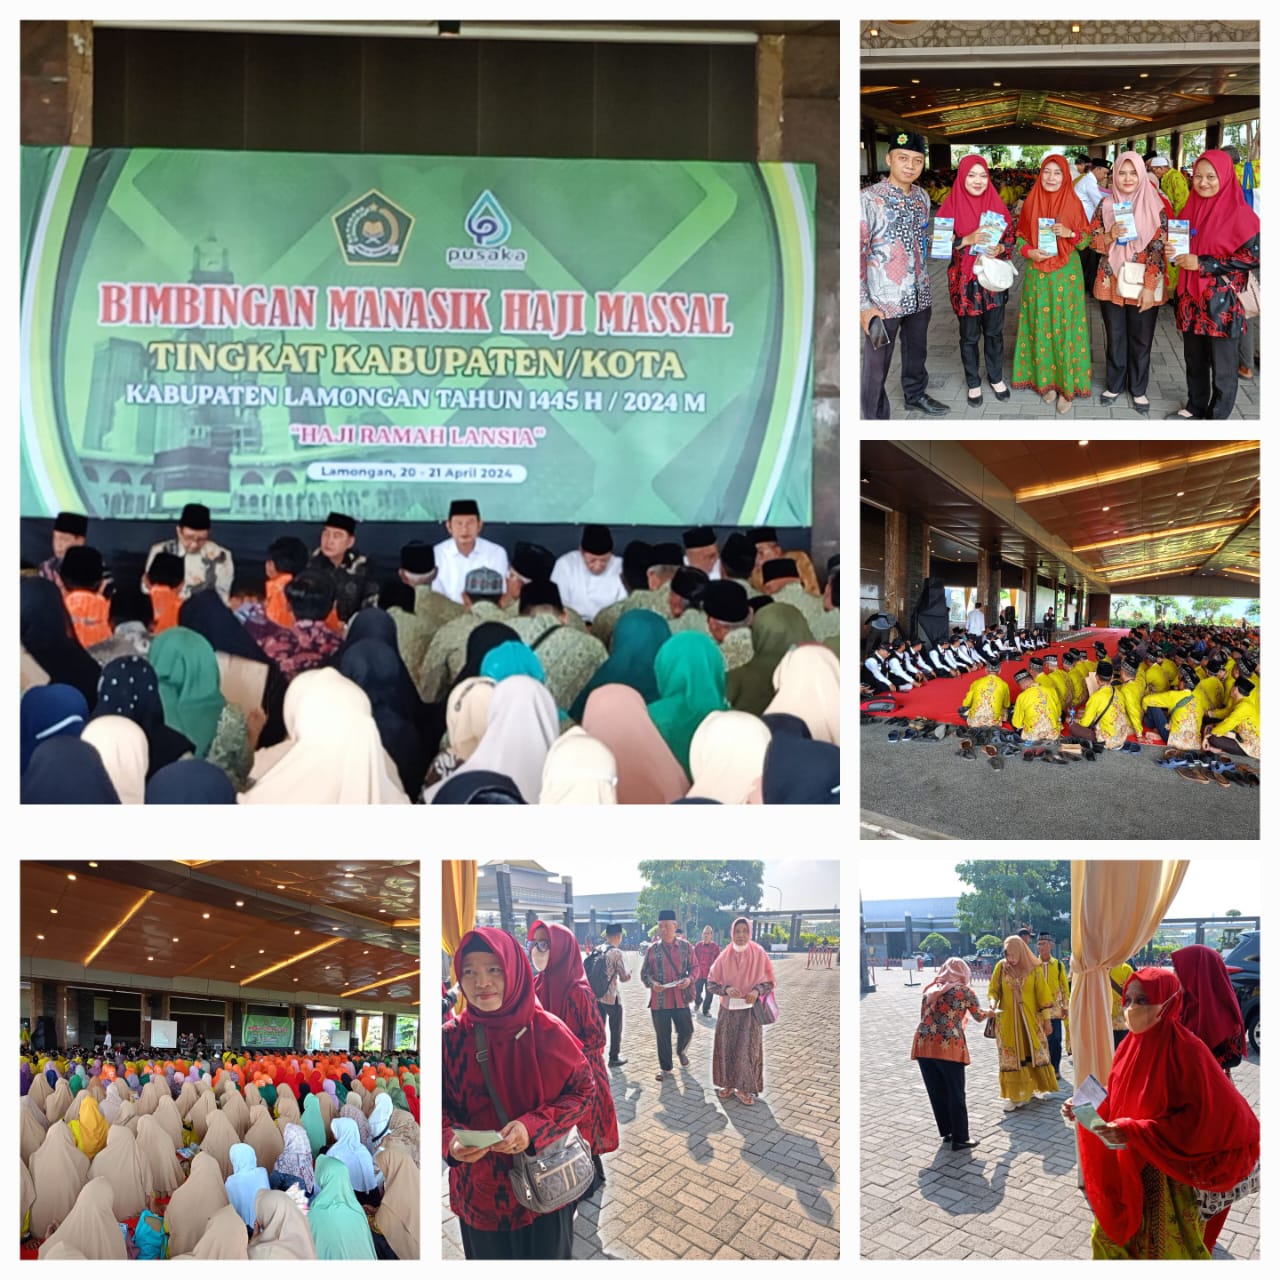 Kegiatan Promosi dalam Acara Bimbingan Manasik Haji Massal Tingkat Kabupaten/Kota Lamongan di Masjid Namira Lamongan